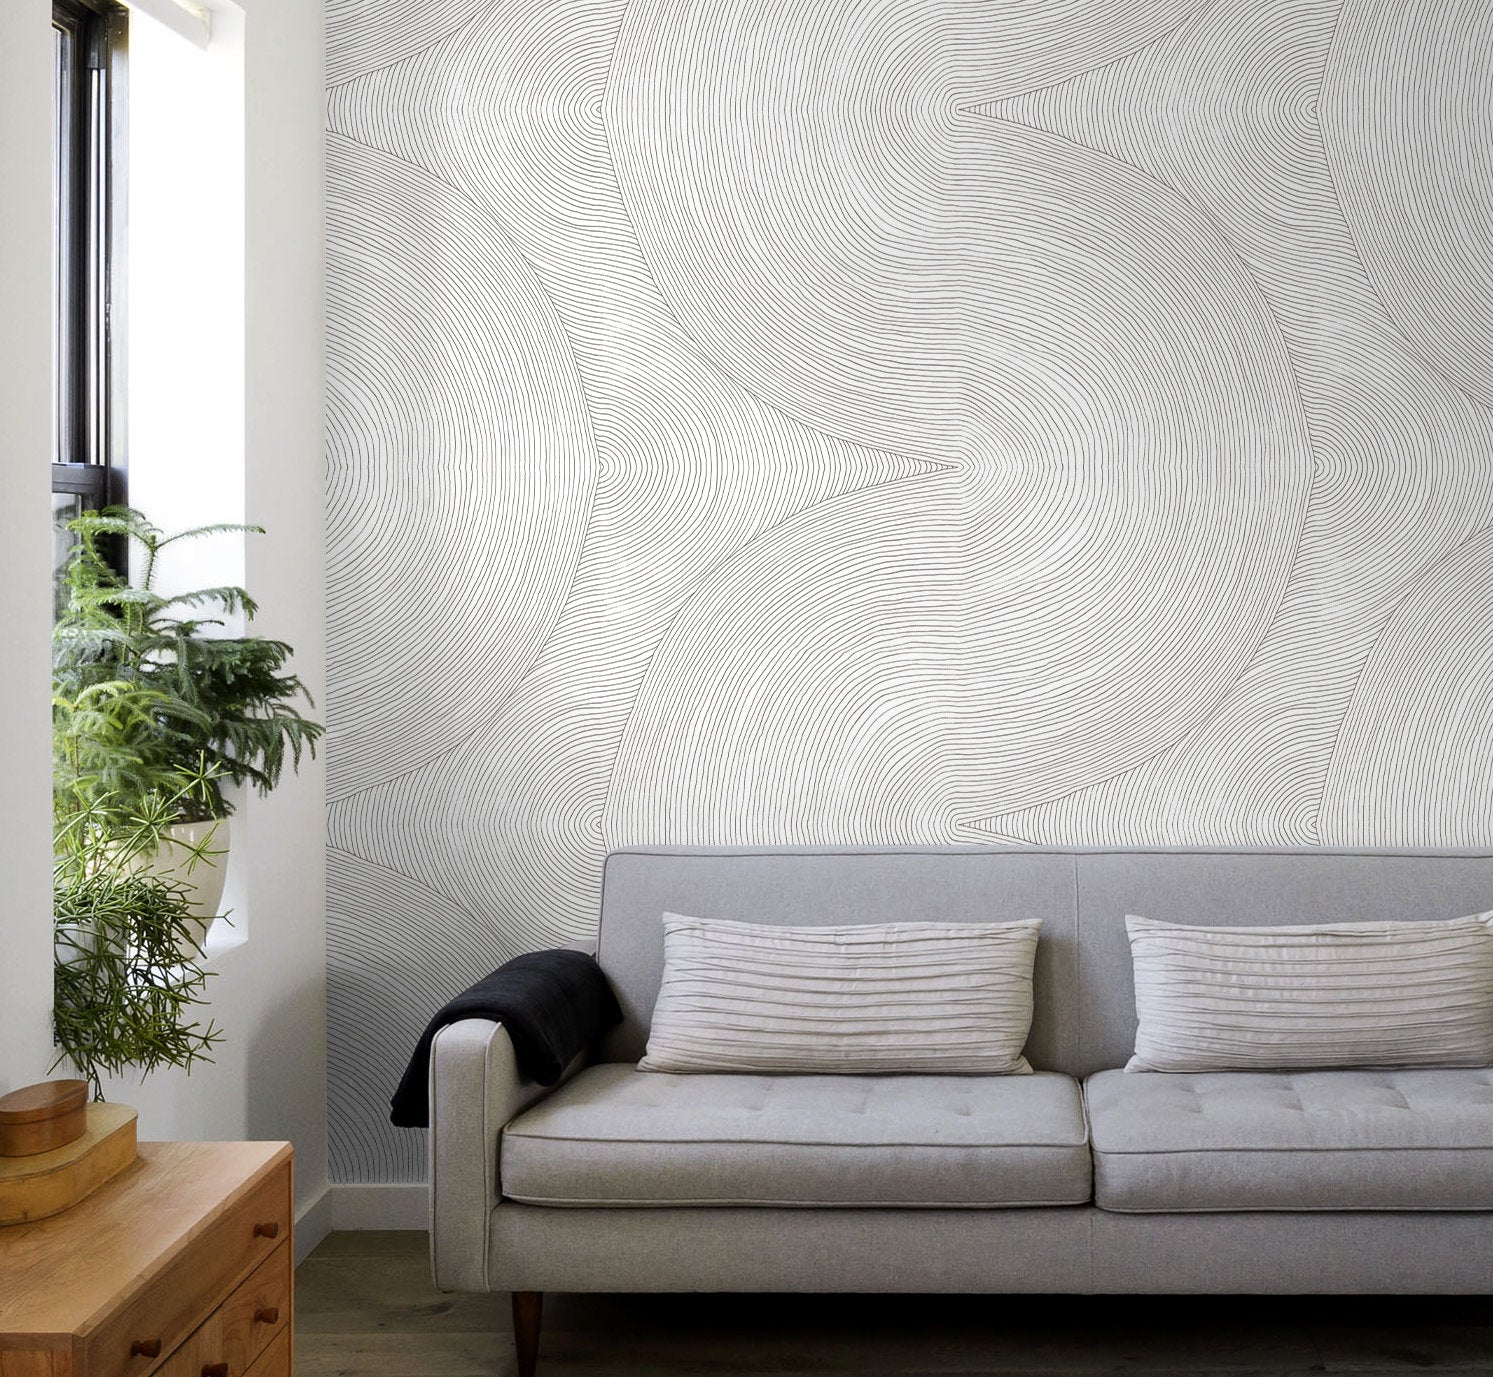 Gray Abstract Line Wallpaper / Peel and Stick Wallpaper Removable Wallpaper Home Decor Wall Art Wall Decor Room Decor - C834